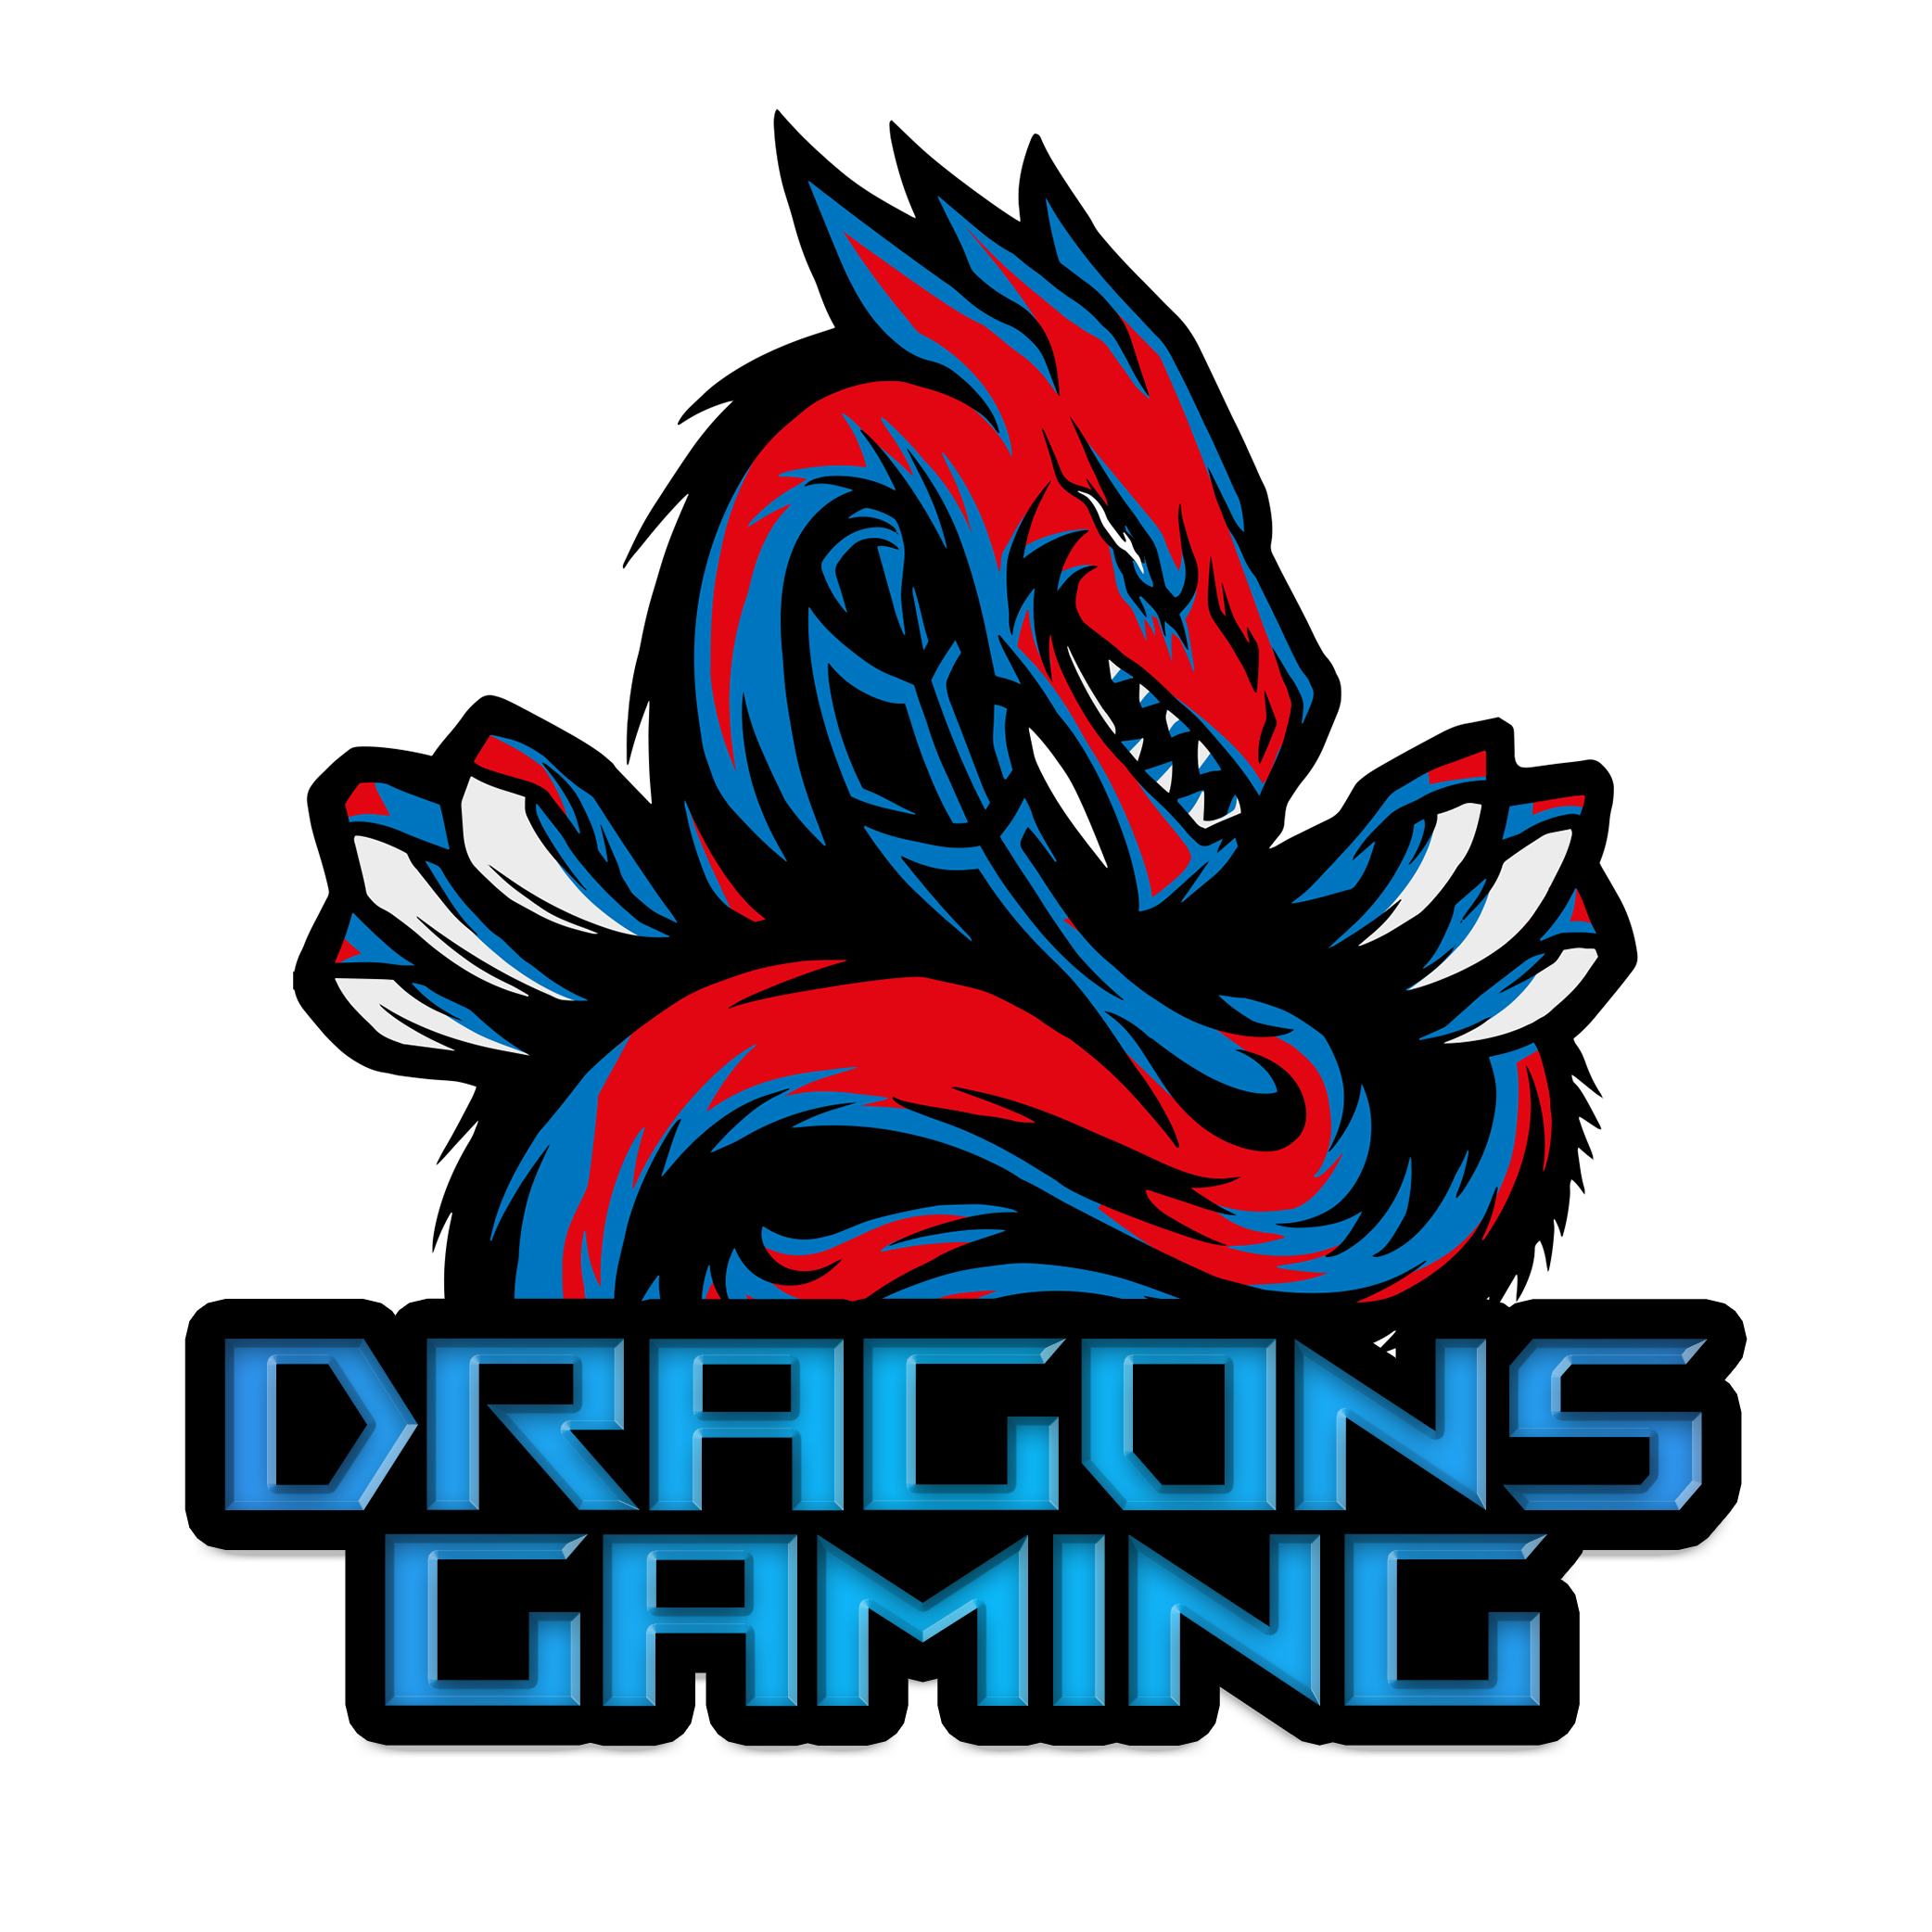 Dragons Gaming